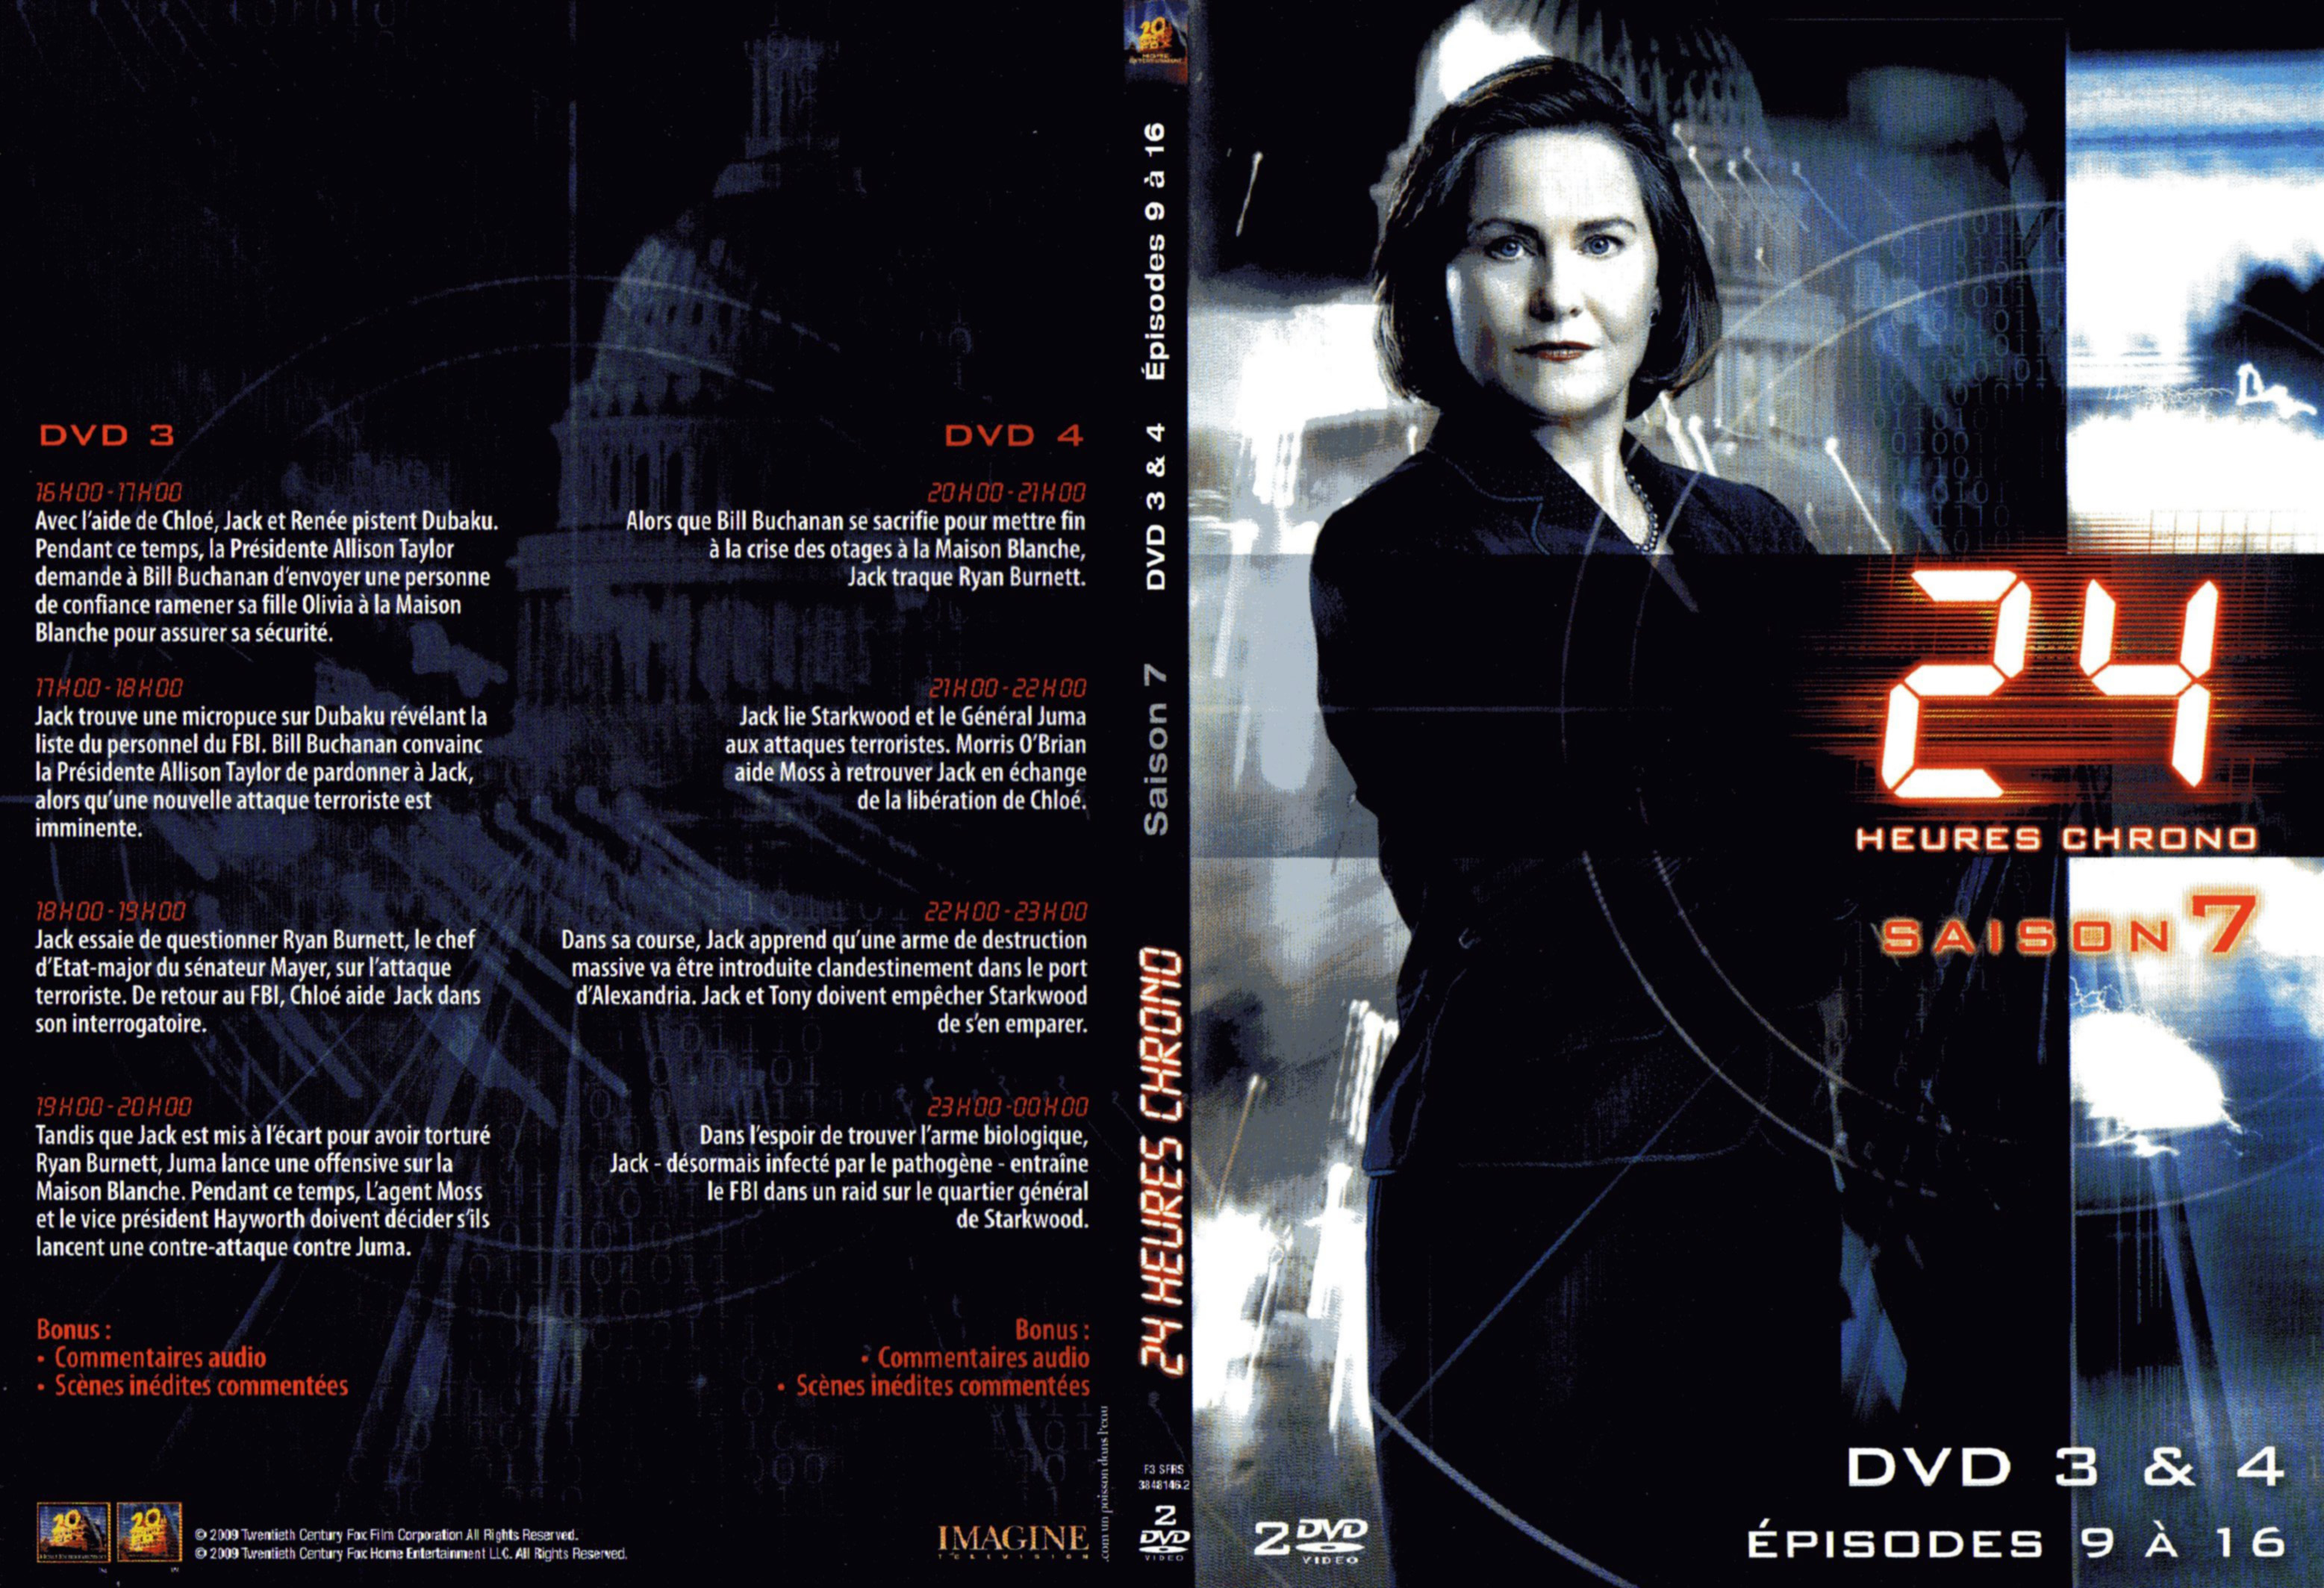 Jaquette DVD 24 heures chrono Saison 7 DVD 2